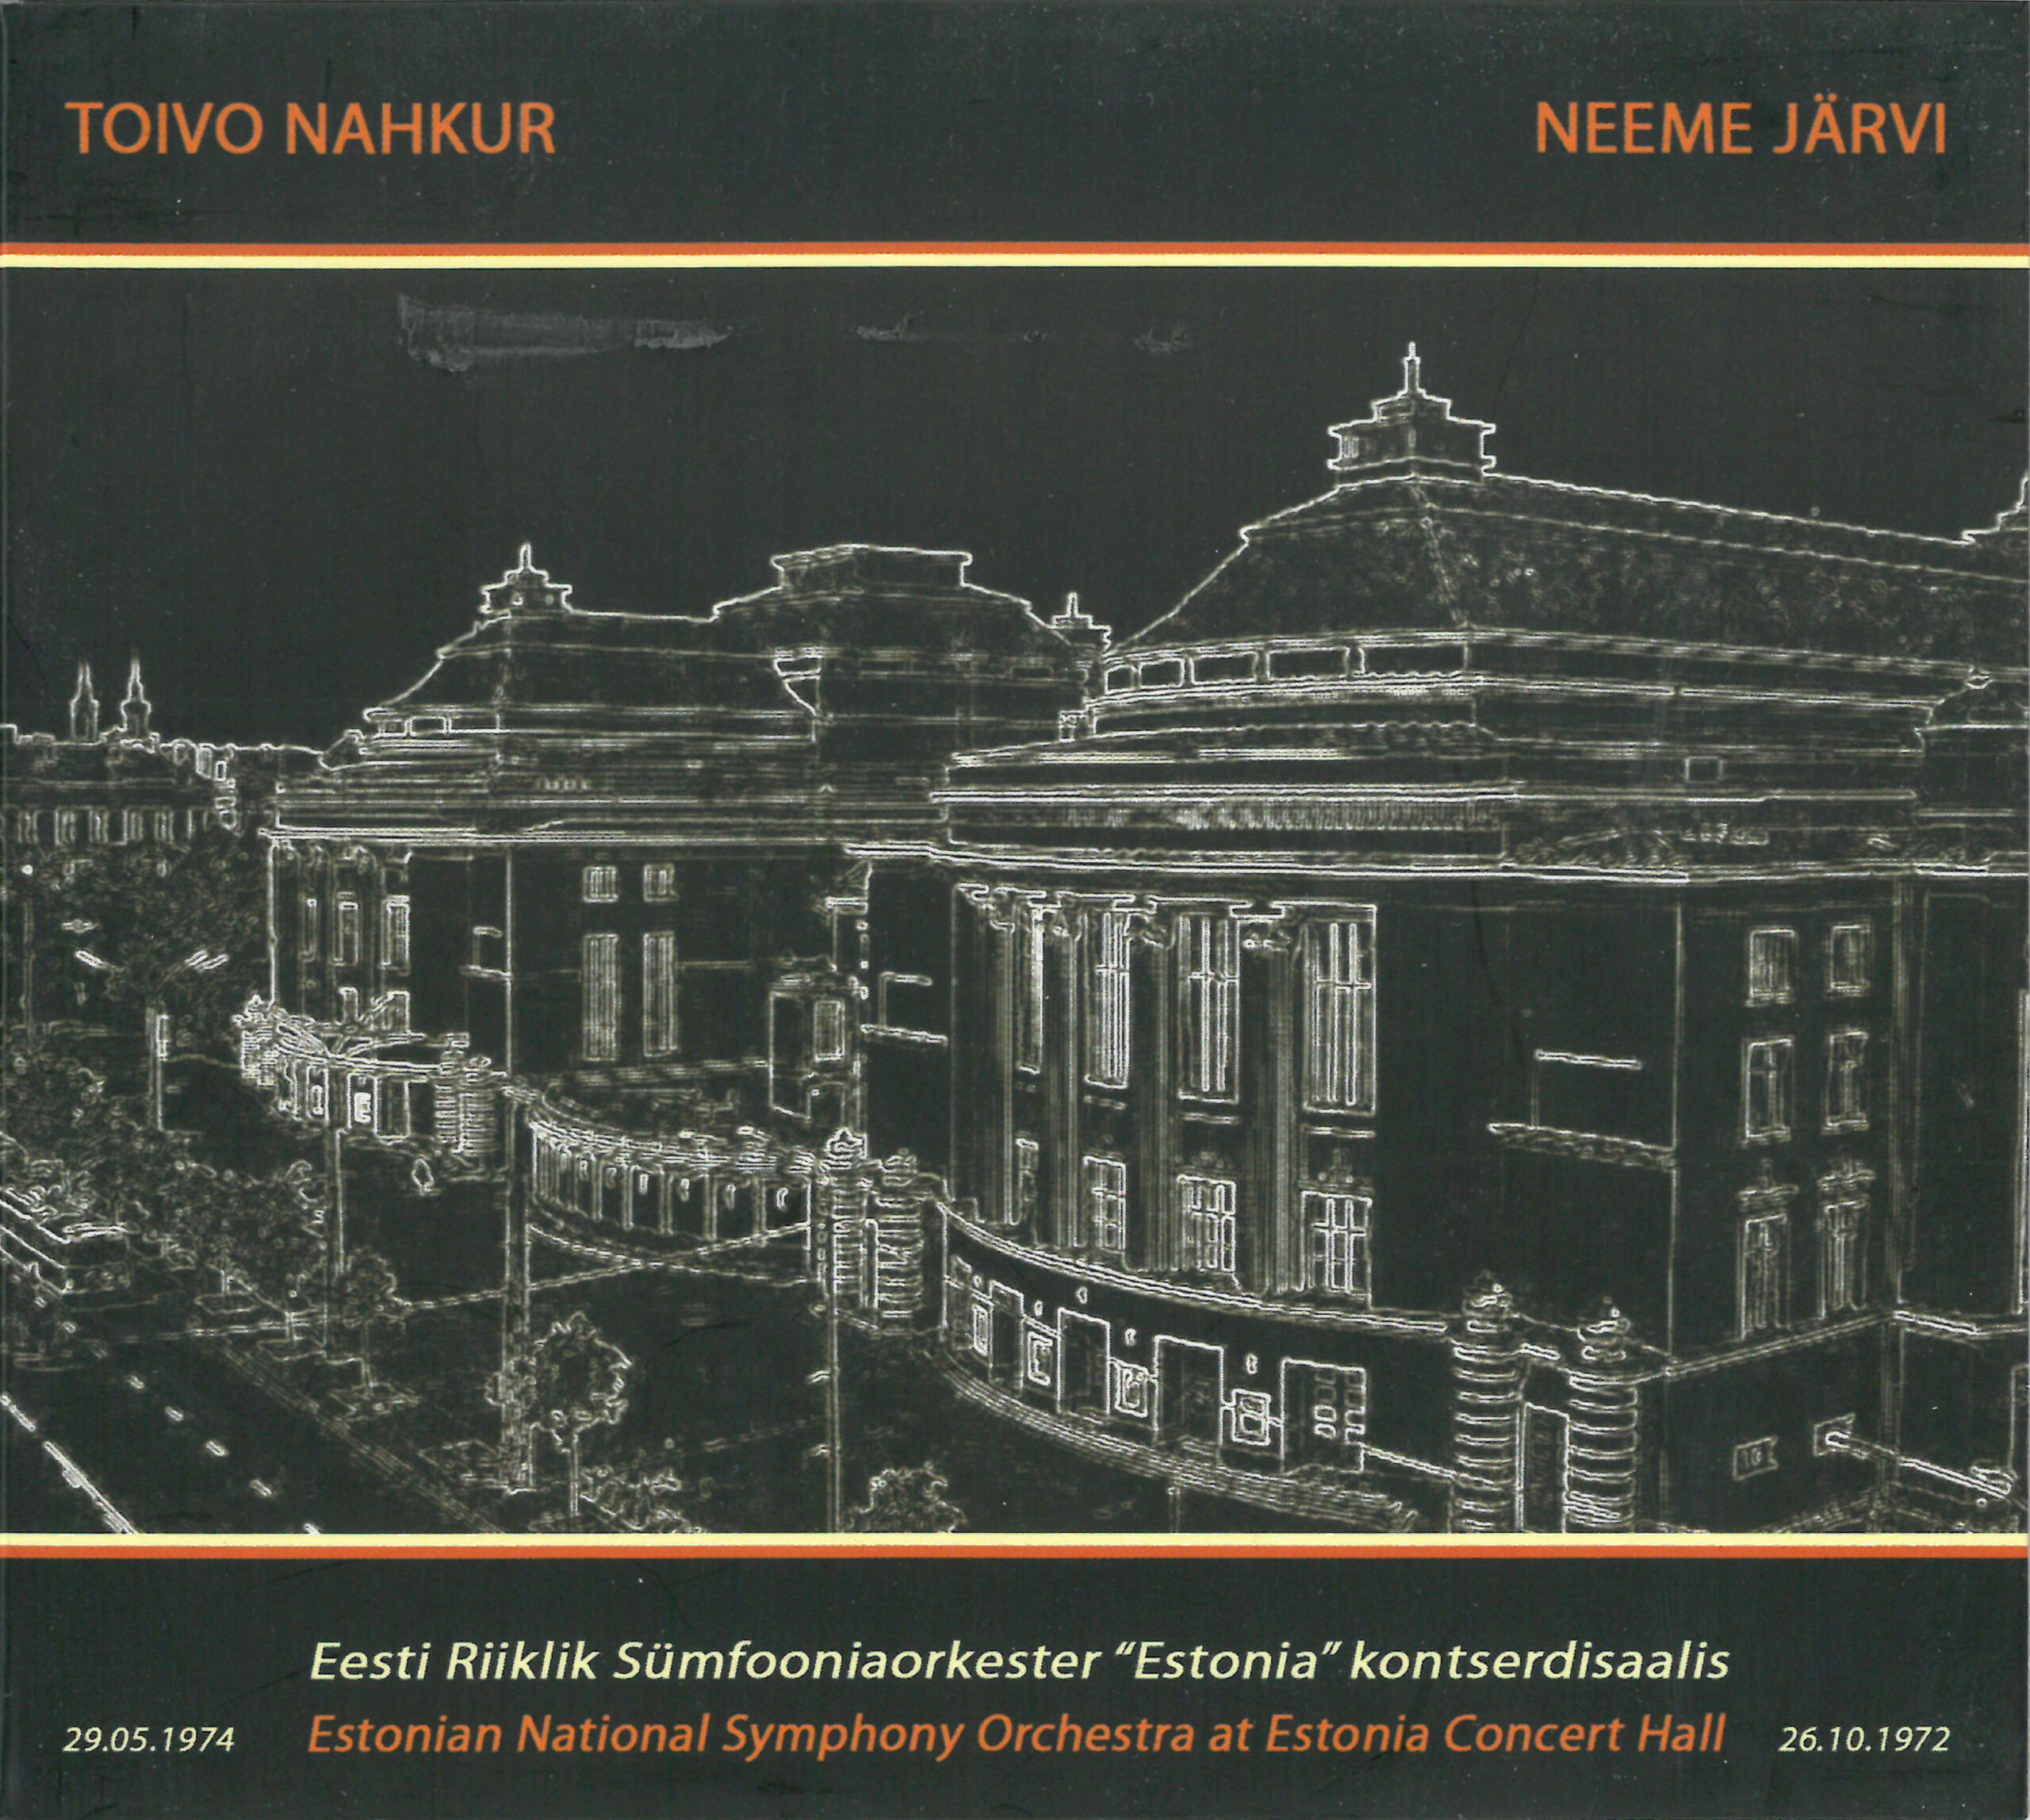 TOIVO NAHKUR, NEEME JÄRVI, ENSO at Estonia Concert Hall. ERP 2010